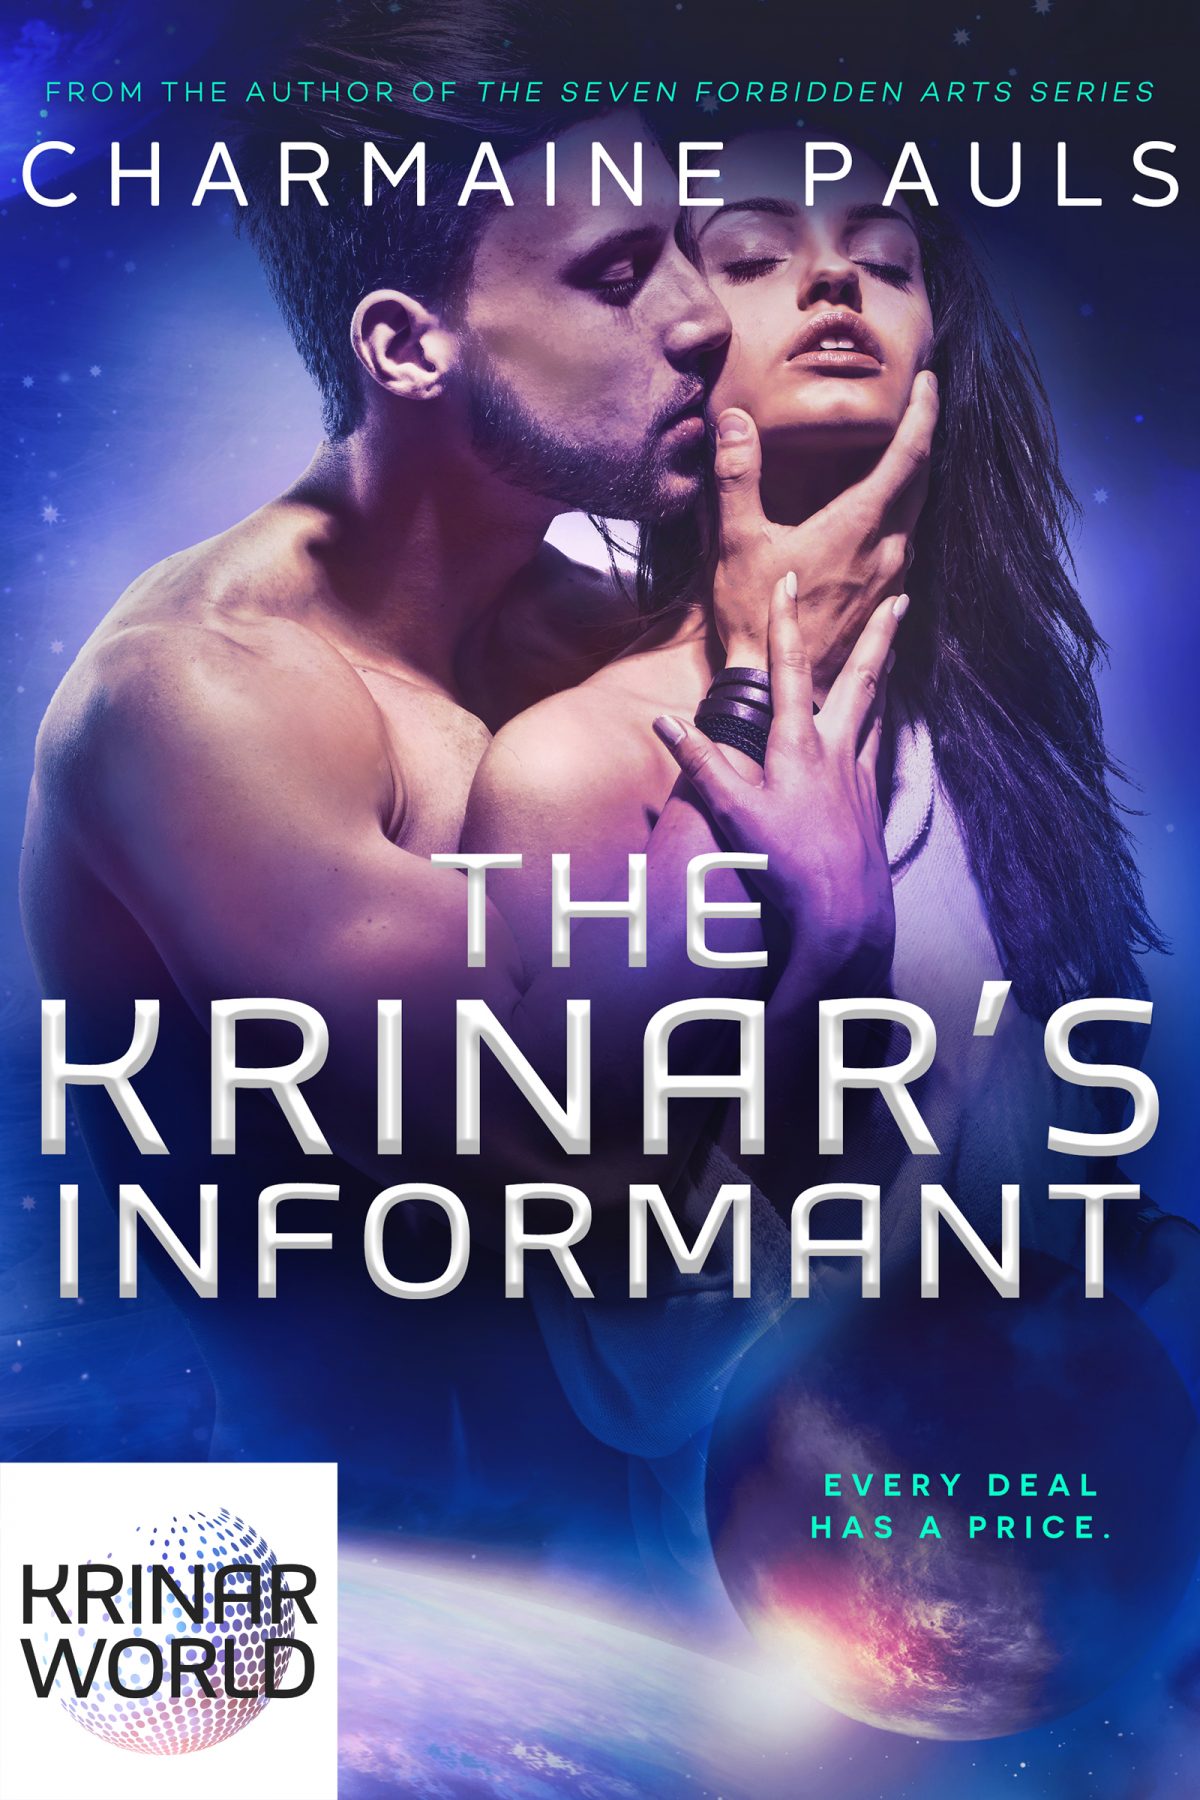 The Krinar’s Informant